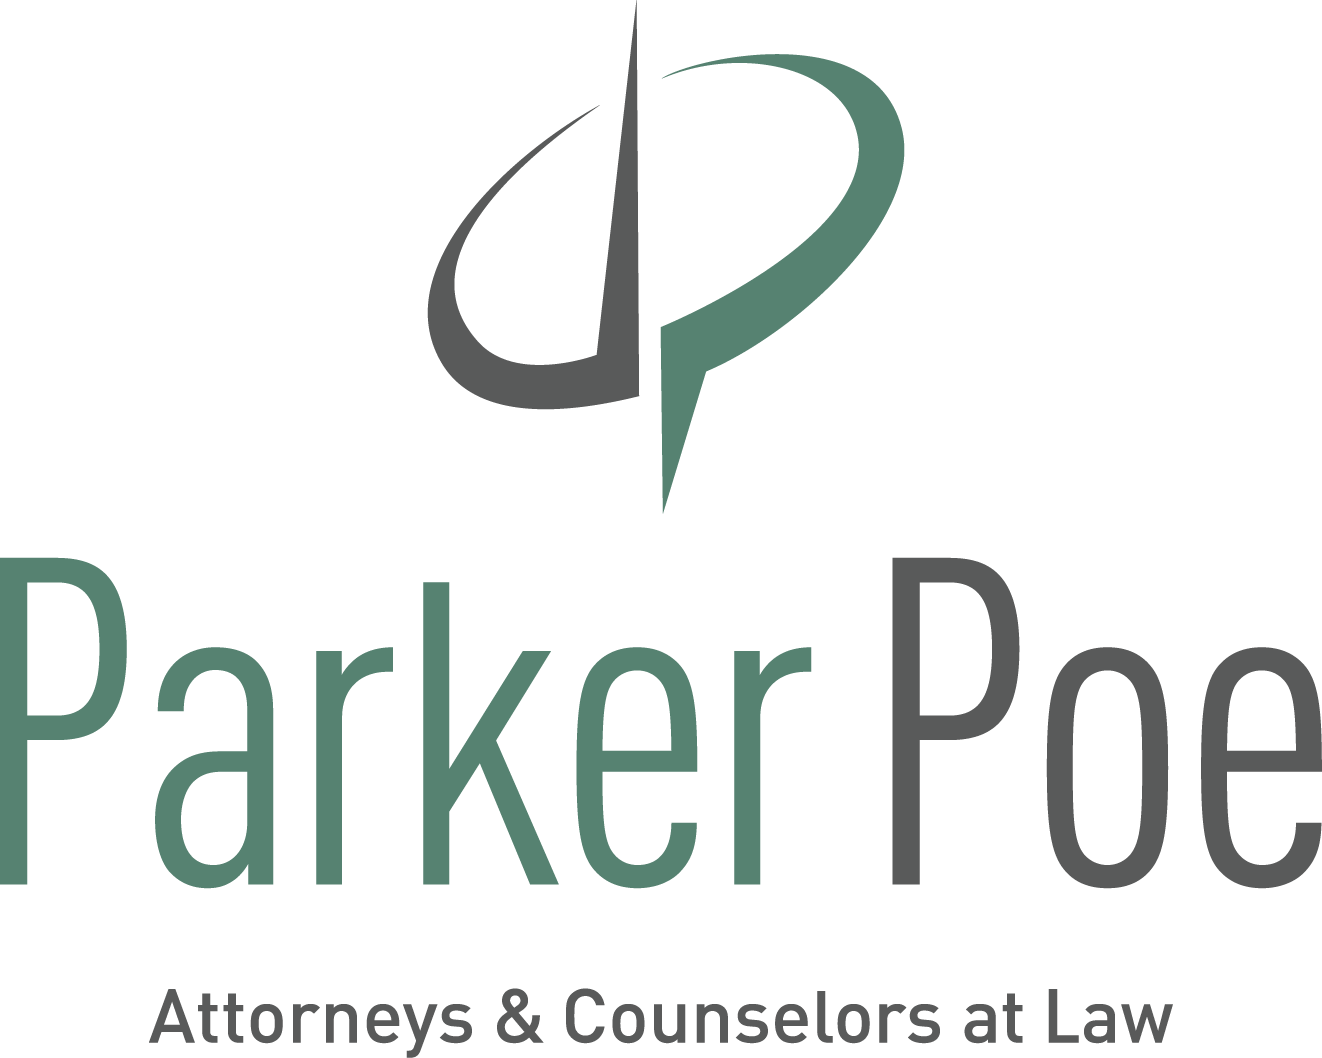 Parker Poe logo